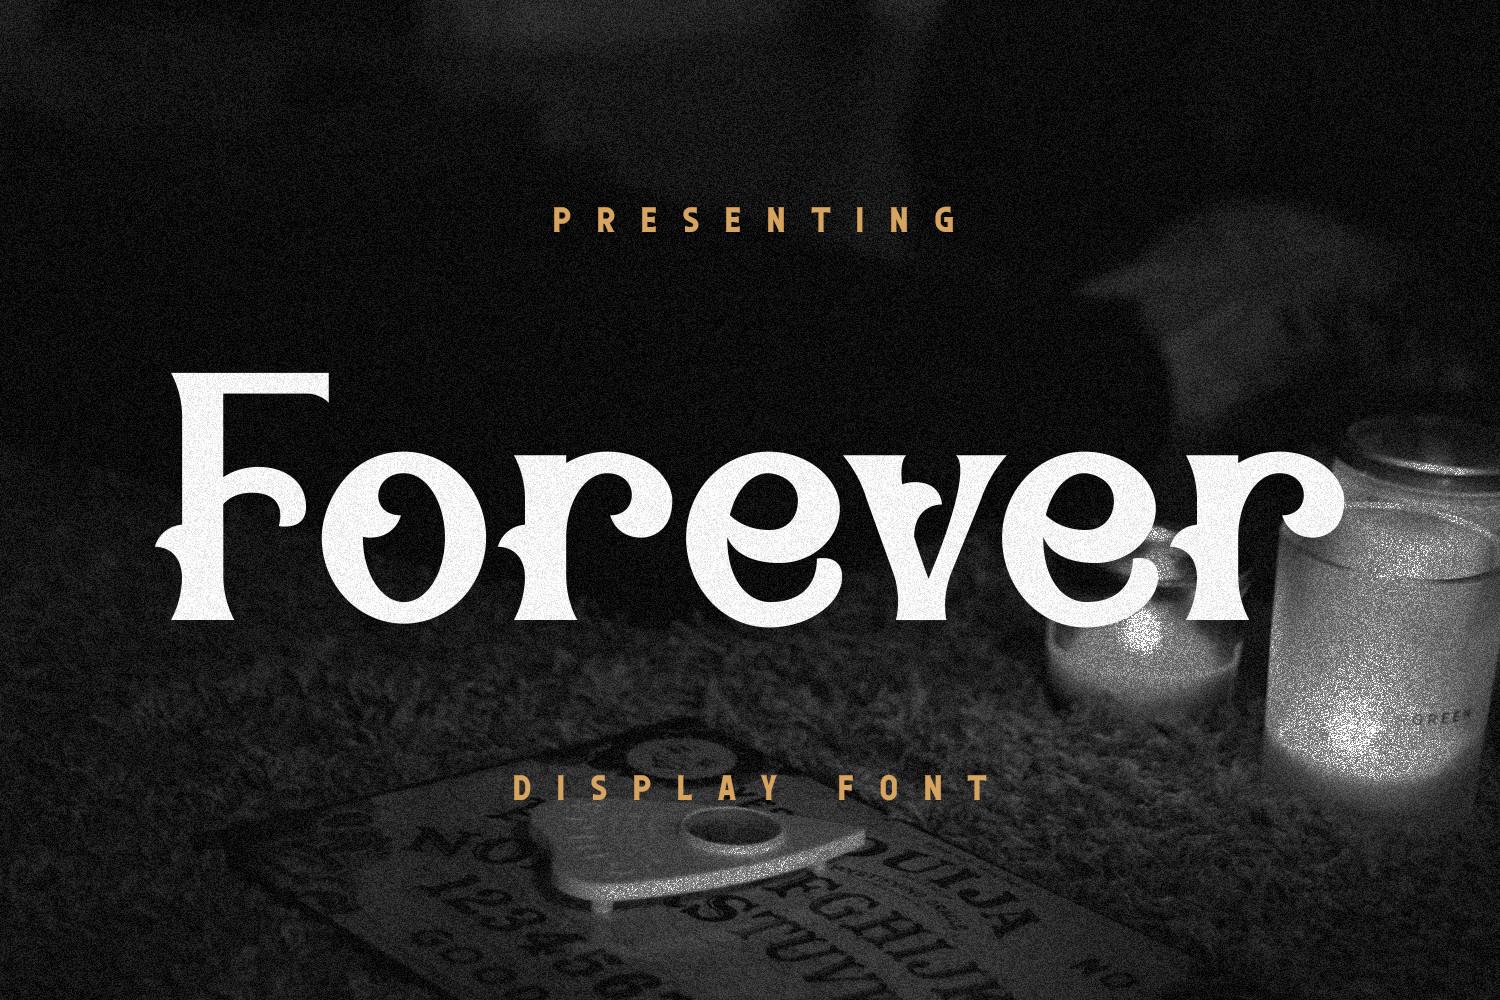 Forever Font